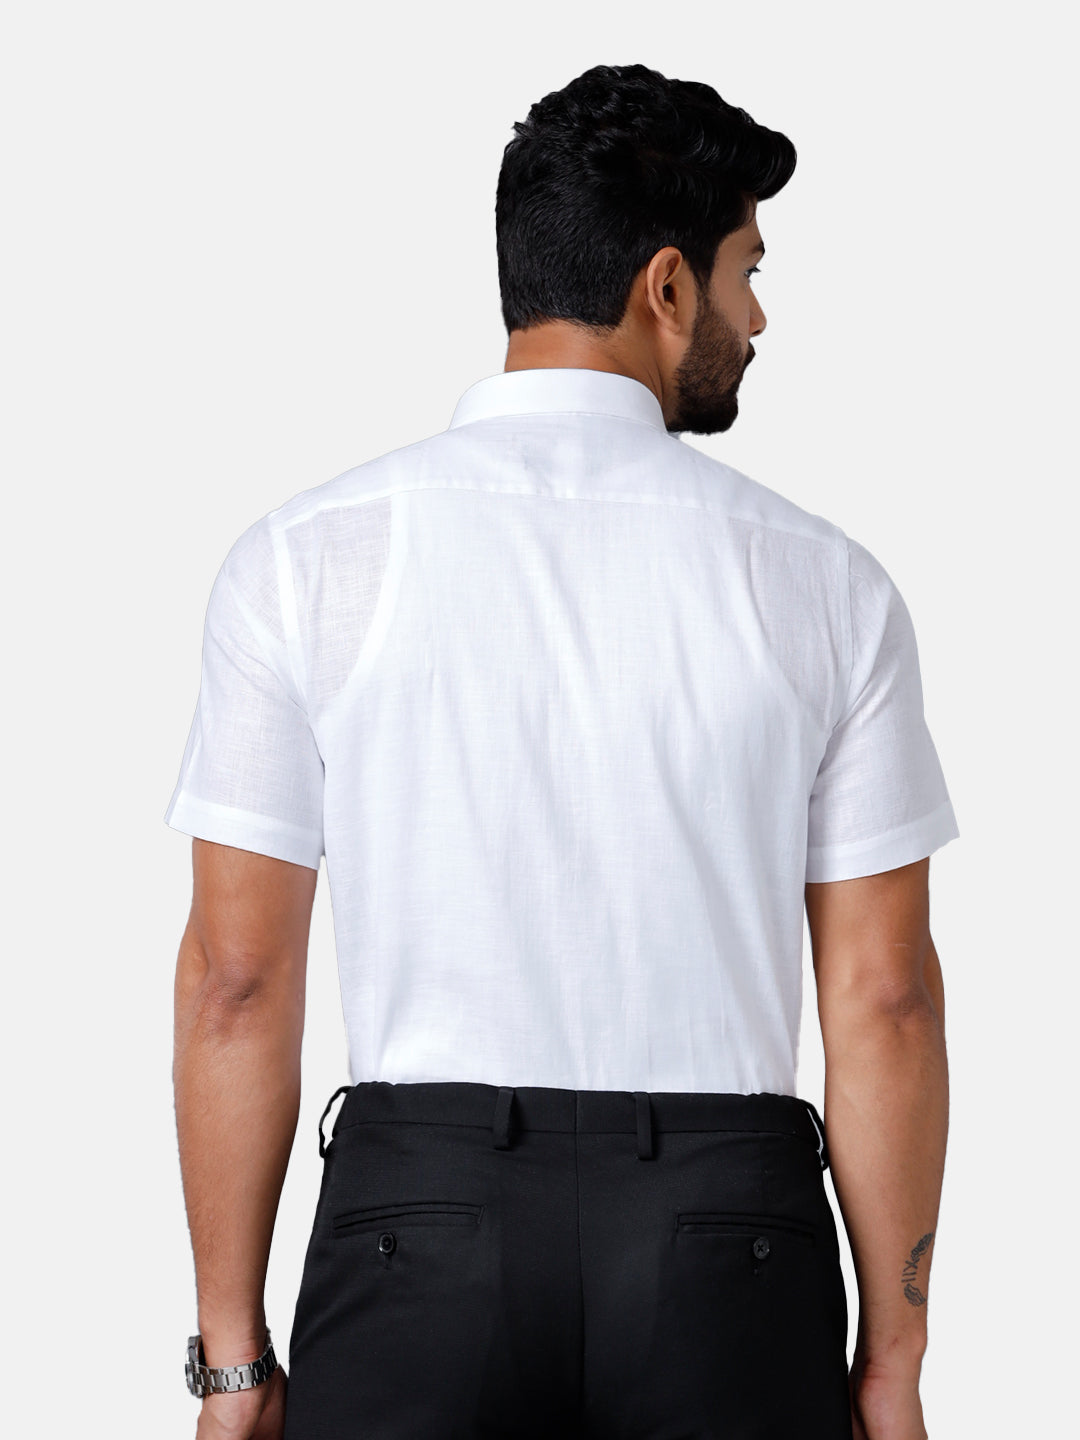 Mens Pure Linen White Shirt Half Sleeves 5100